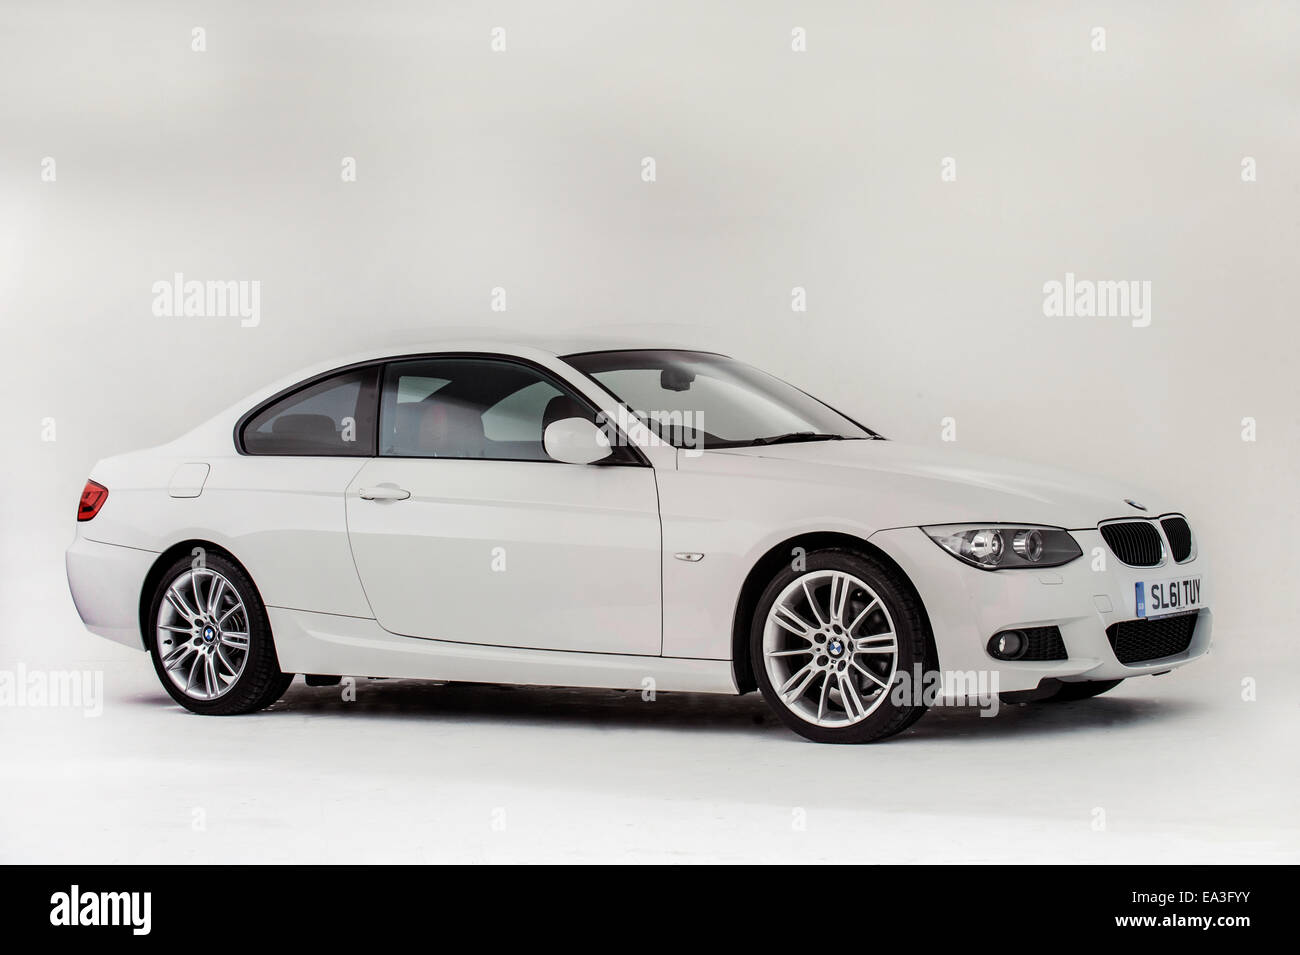 2011 BMW 3 series Coupe Stock Photo